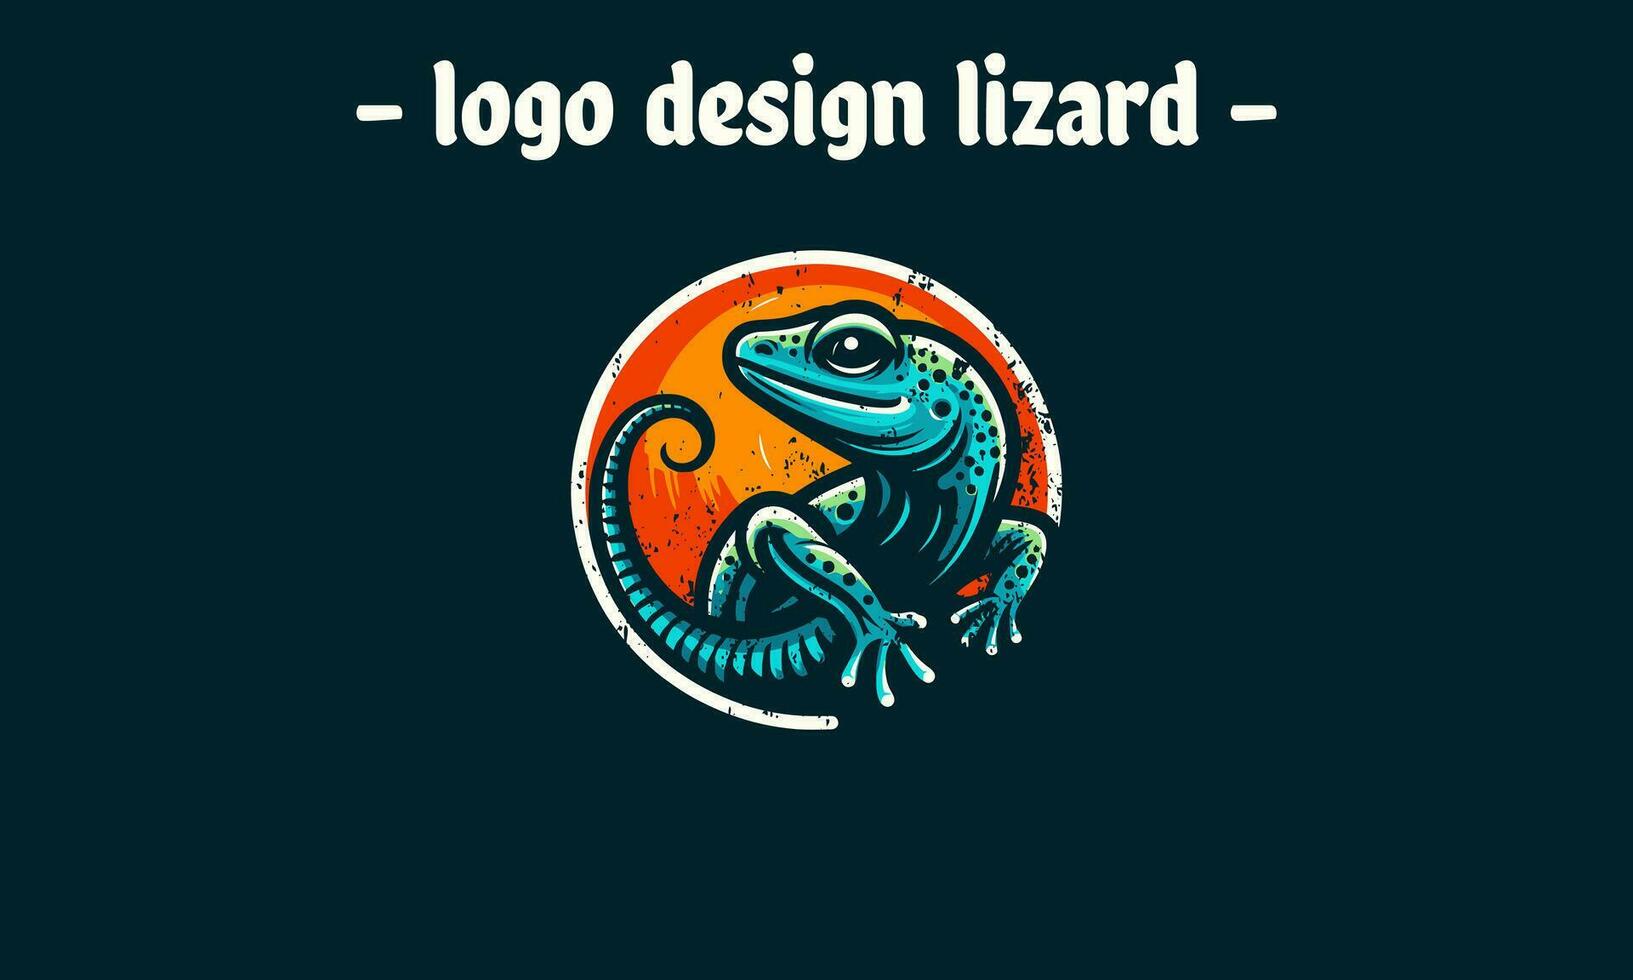 lagartija vistoso vector ilustración mascota diseño